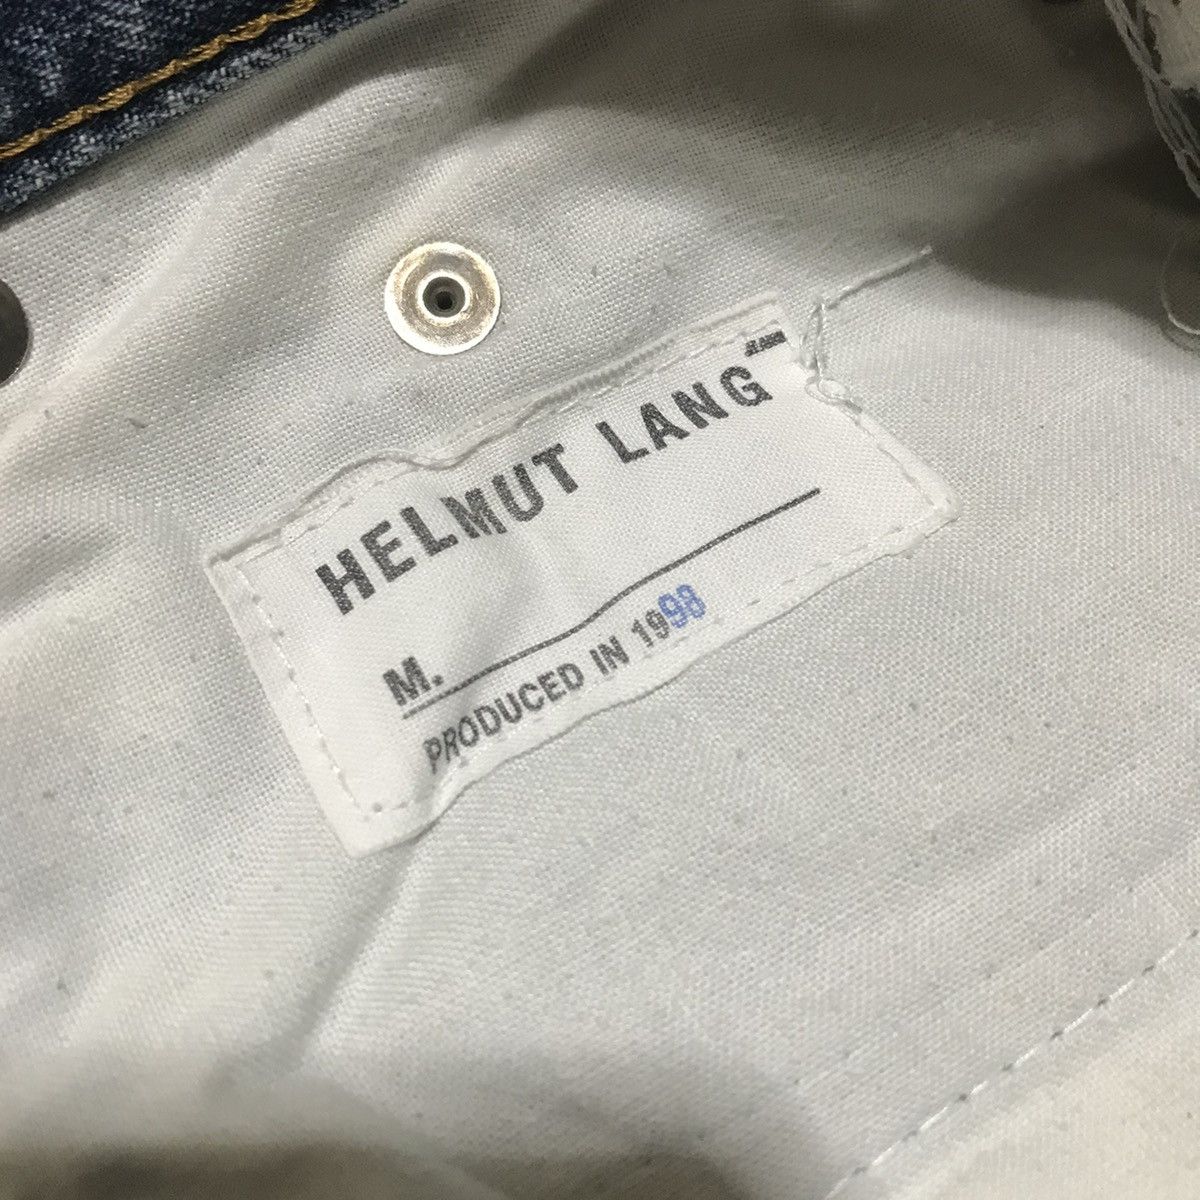 1998 Helmut Lang Jeans Classic Cut Raw Denim - 6